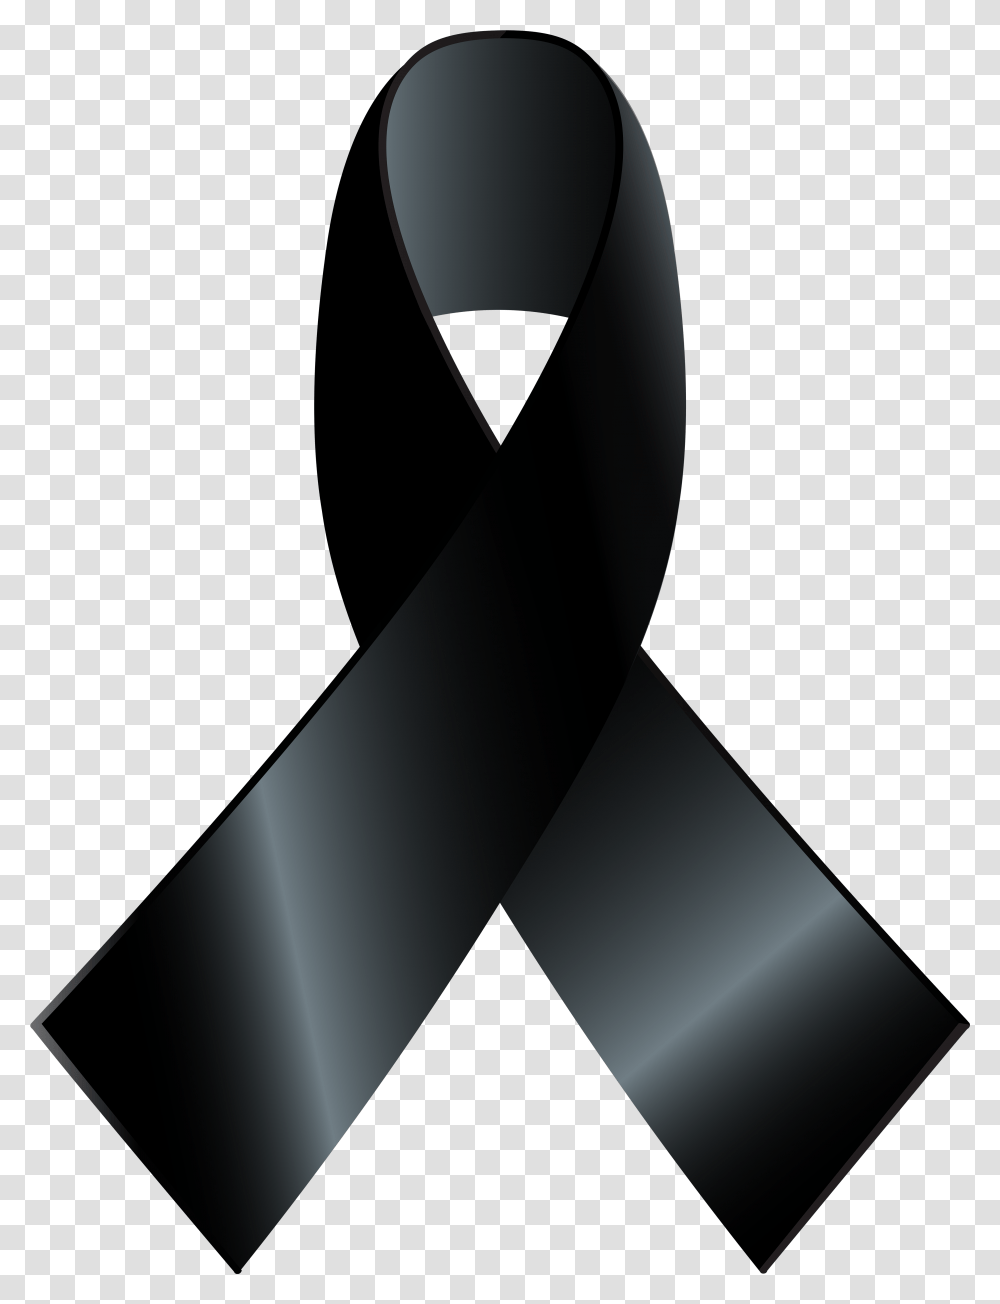 Black Awareness Ribbon Clip Art Black Ribbon, Tie, Accessories, Accessory, Necktie Transparent Png